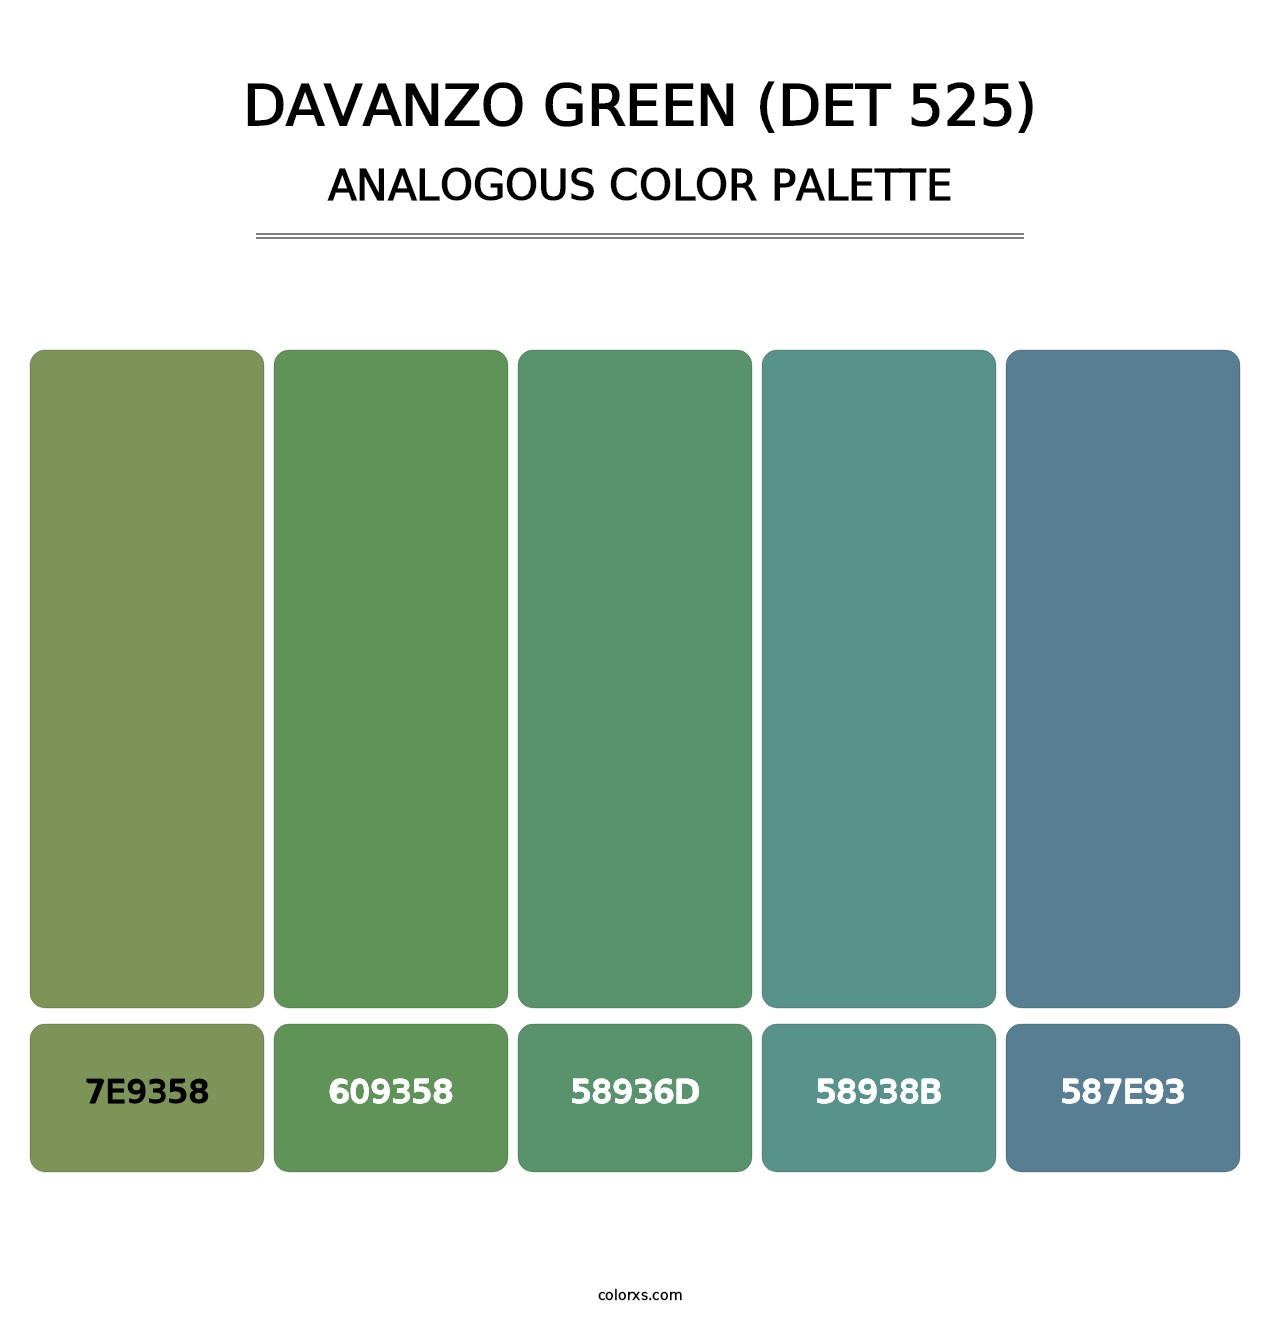 DaVanzo Green (DET 525) - Analogous Color Palette